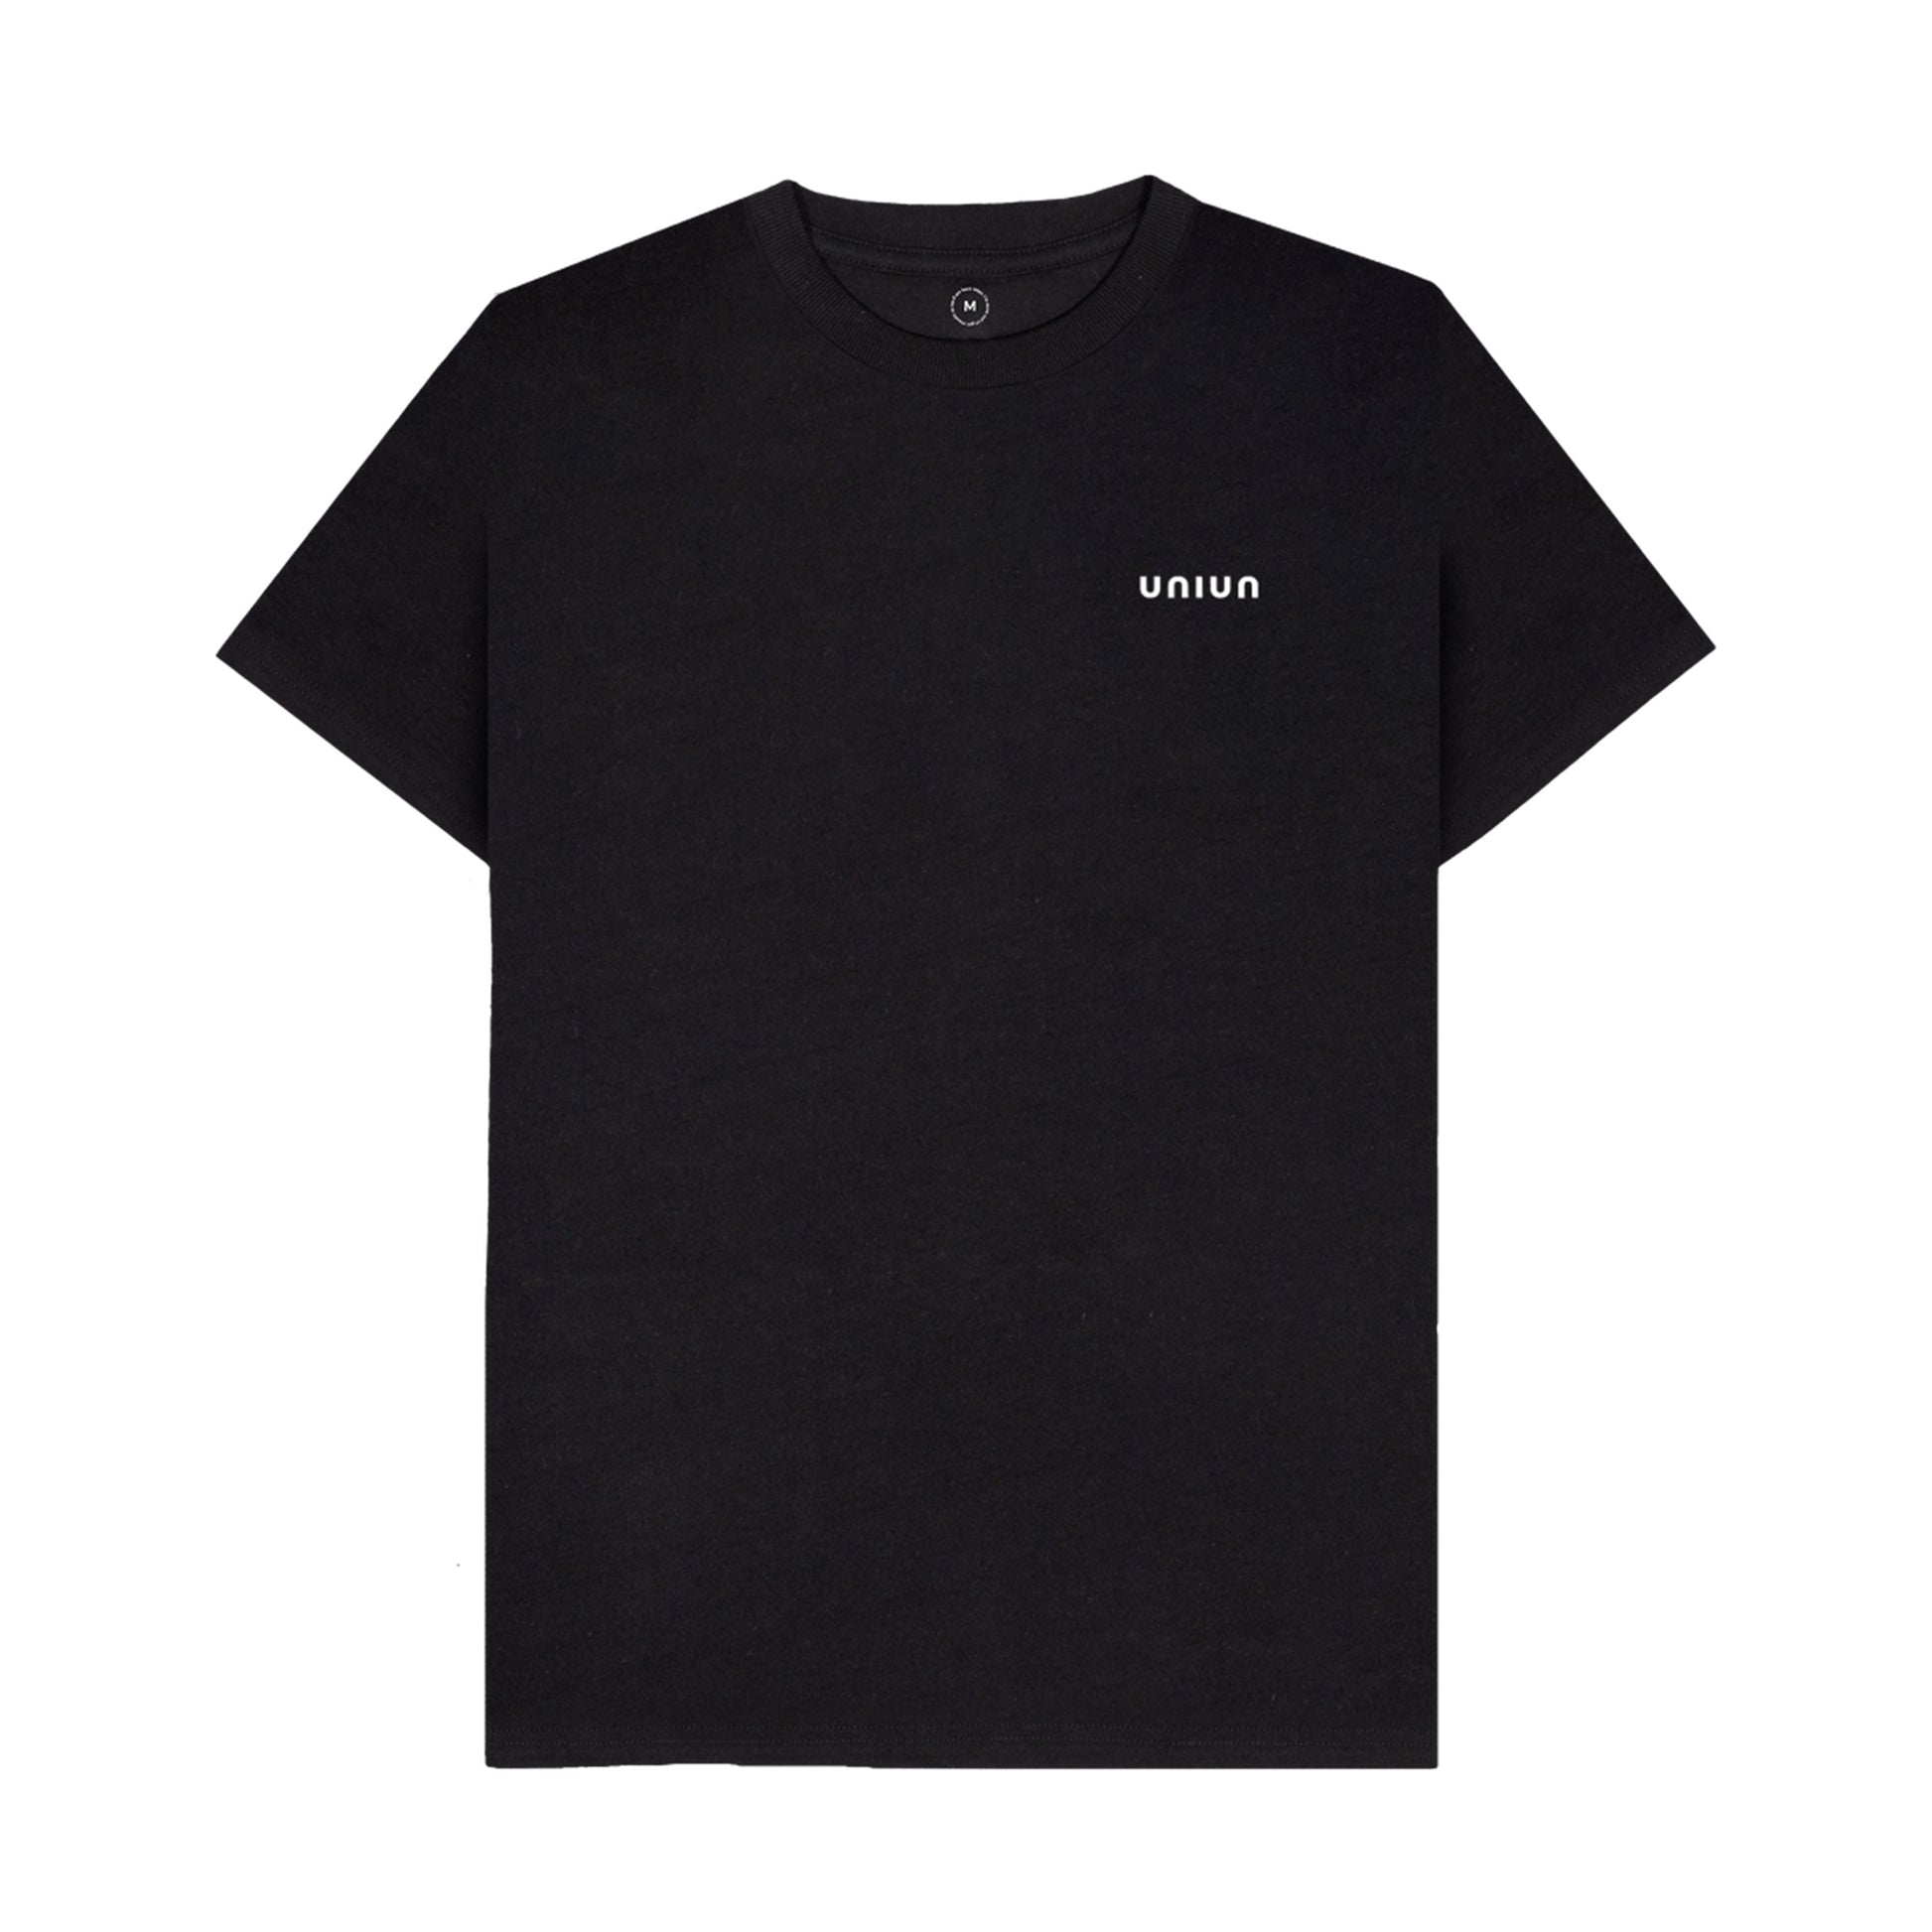 UNIUN Black T-shirt